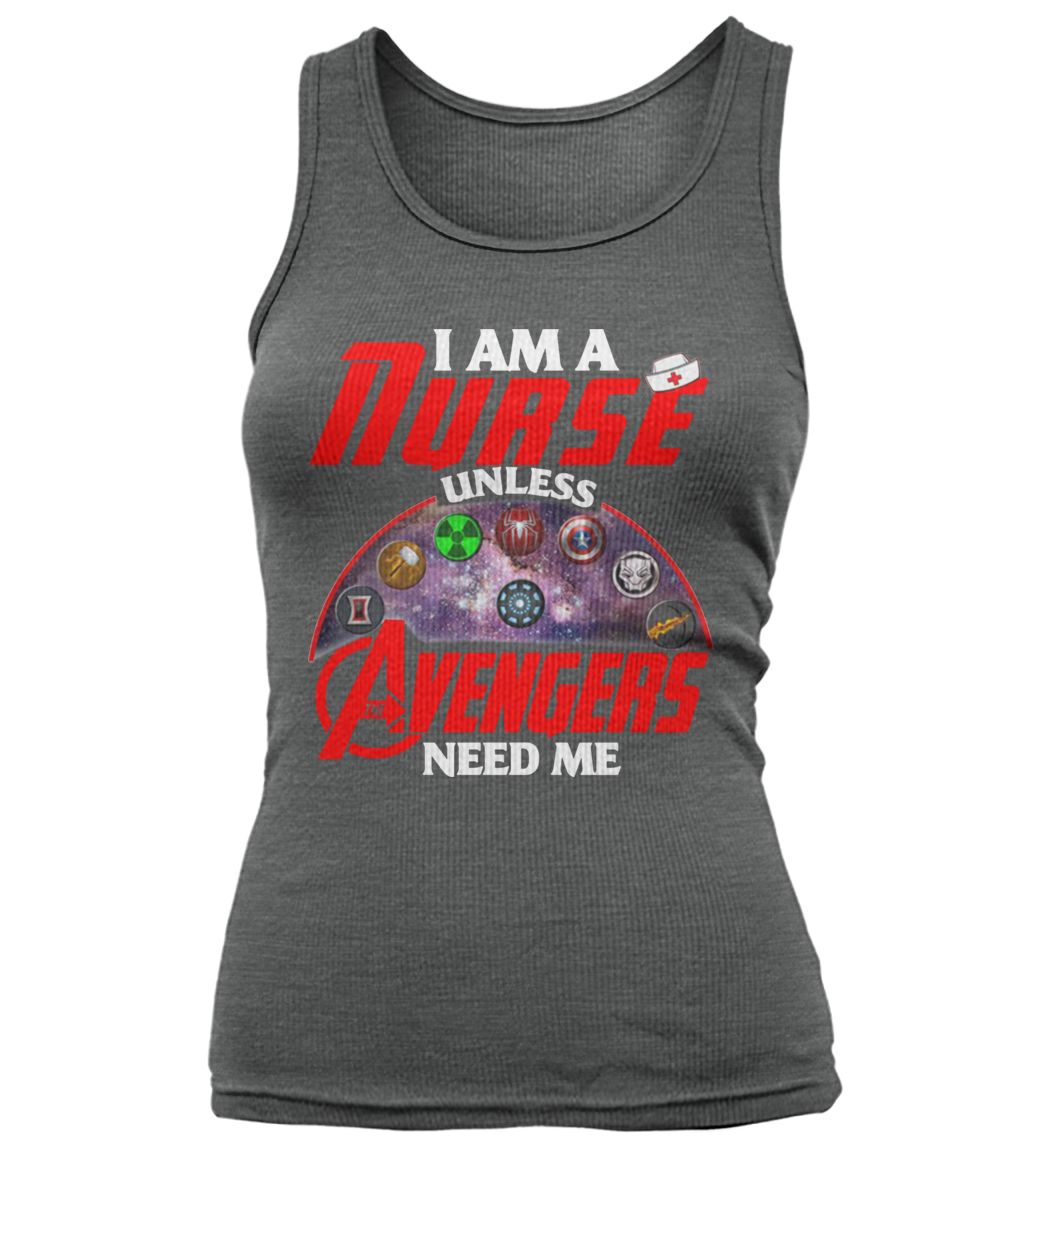 I am a nurse unless avengers need me women's tank top